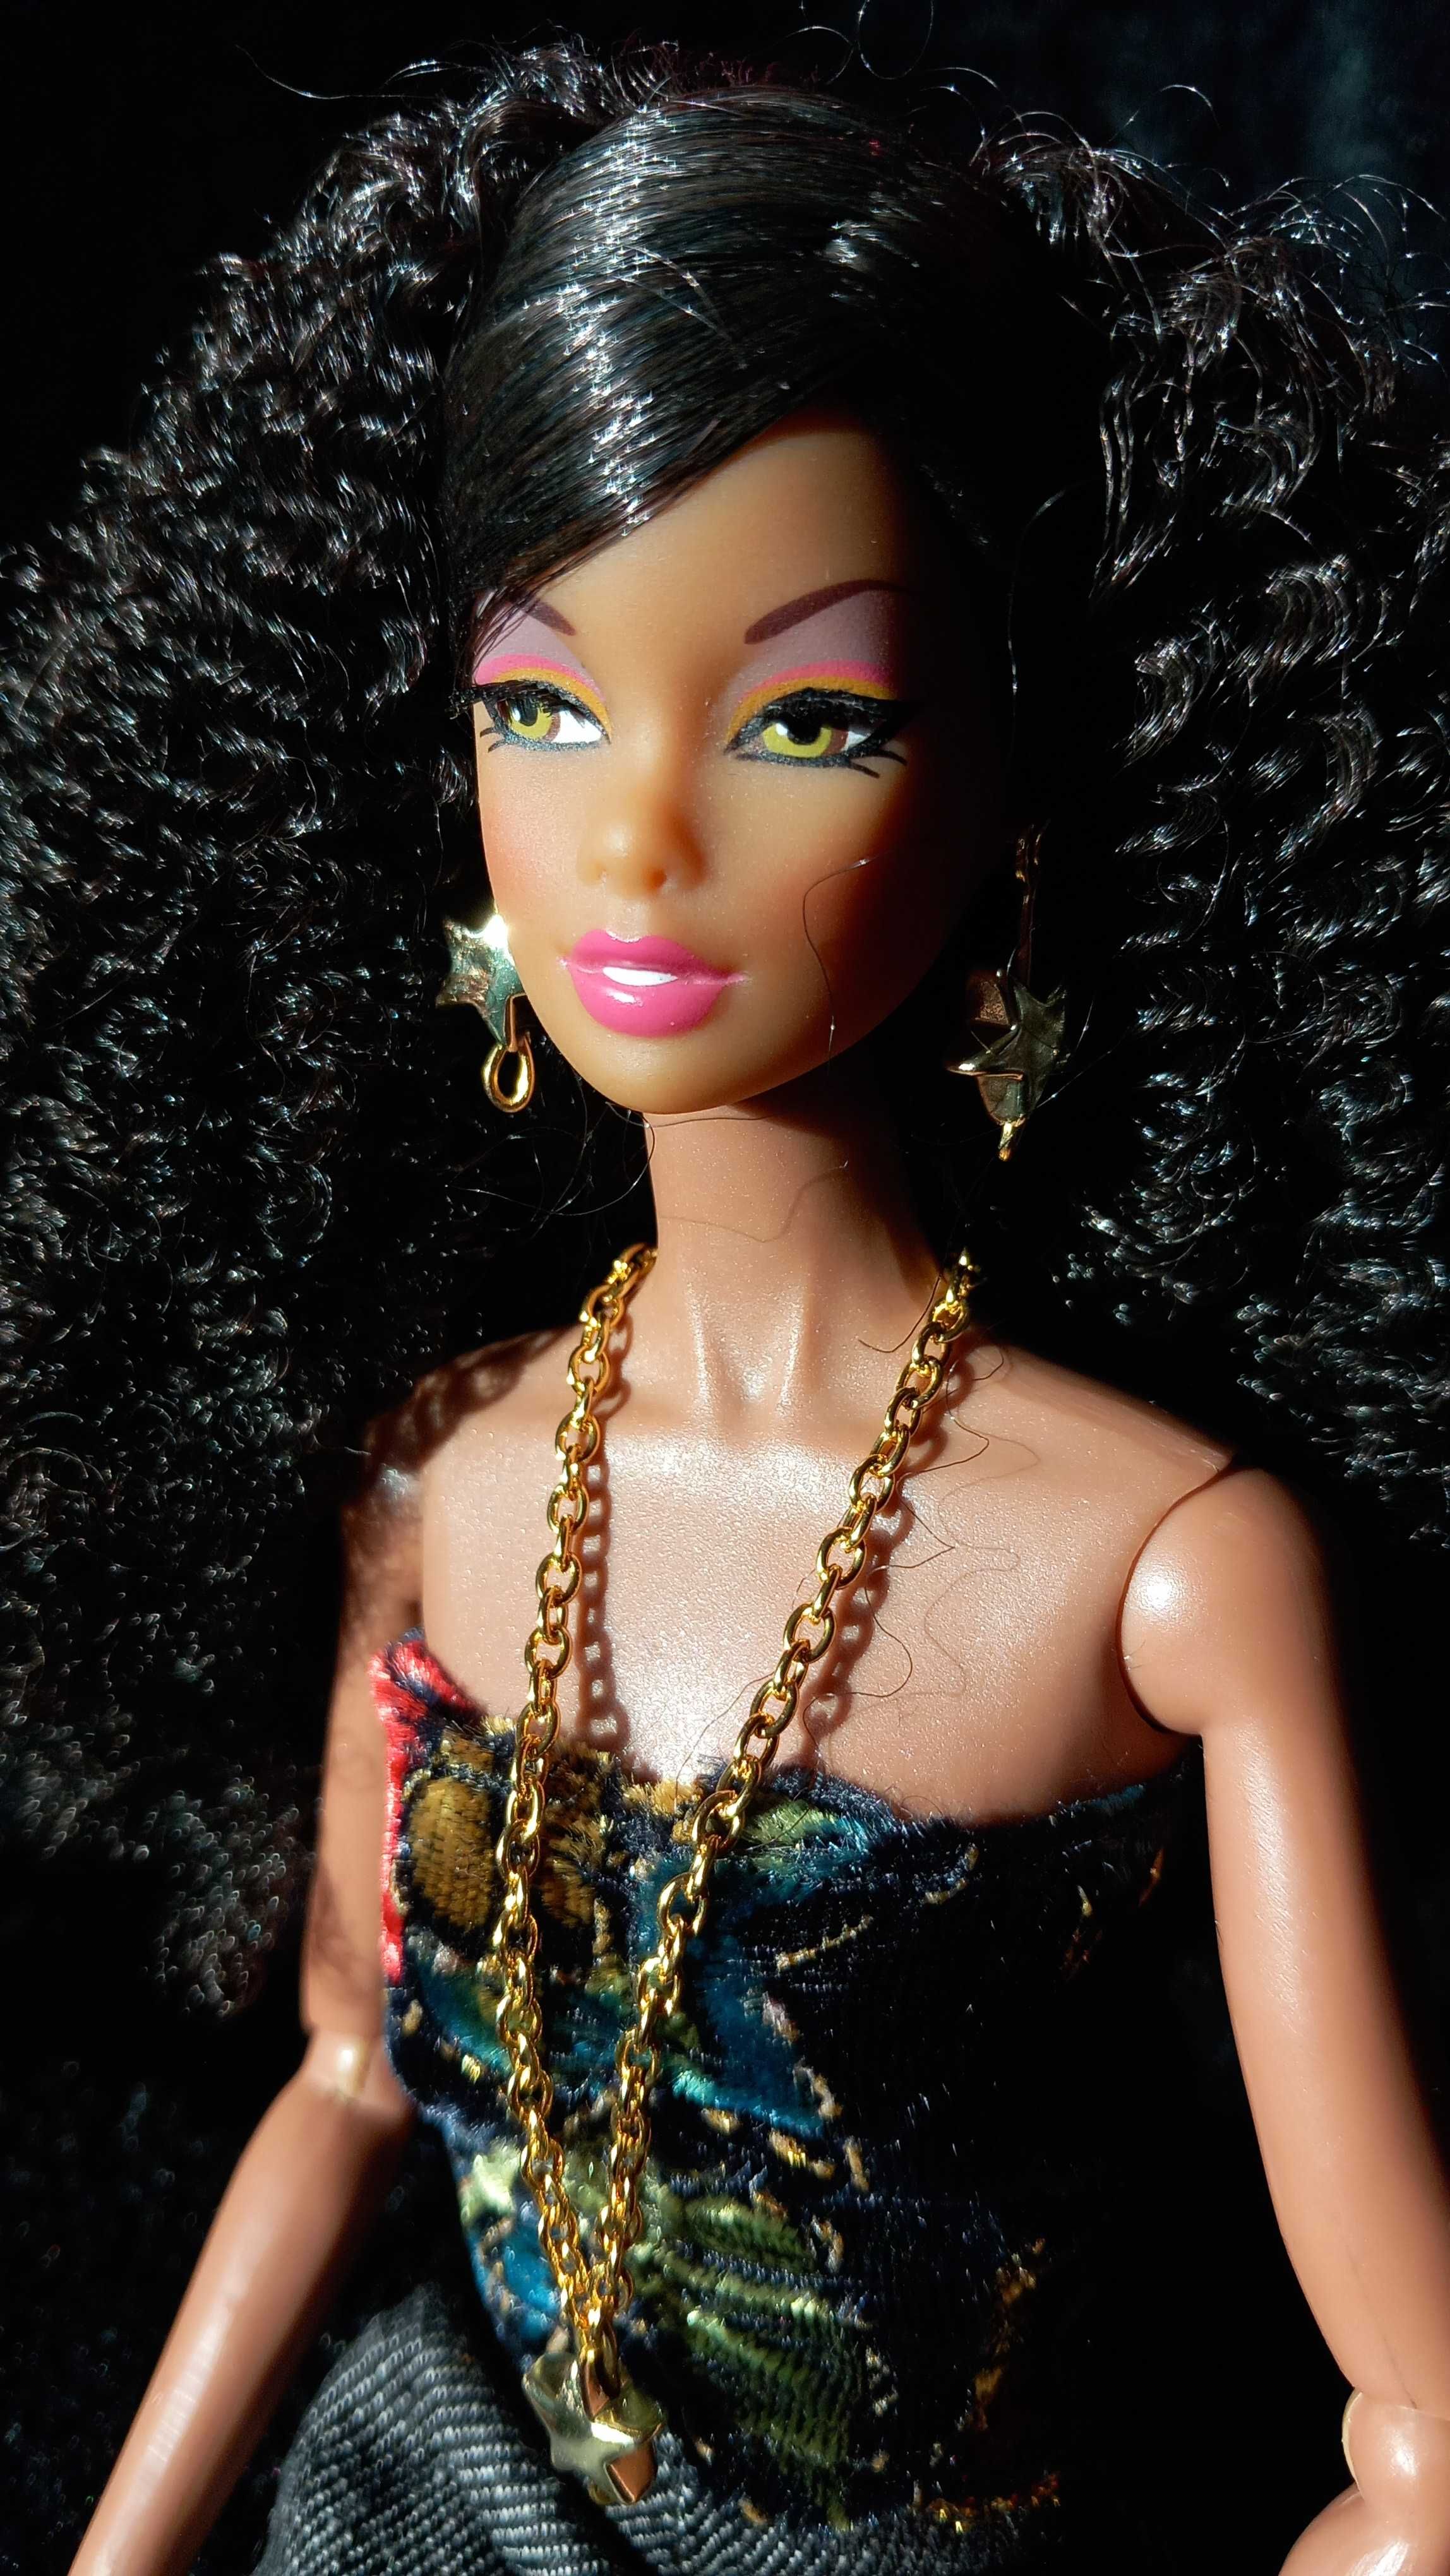 Biżuteria dla lalek Barbie, Integrity Toys